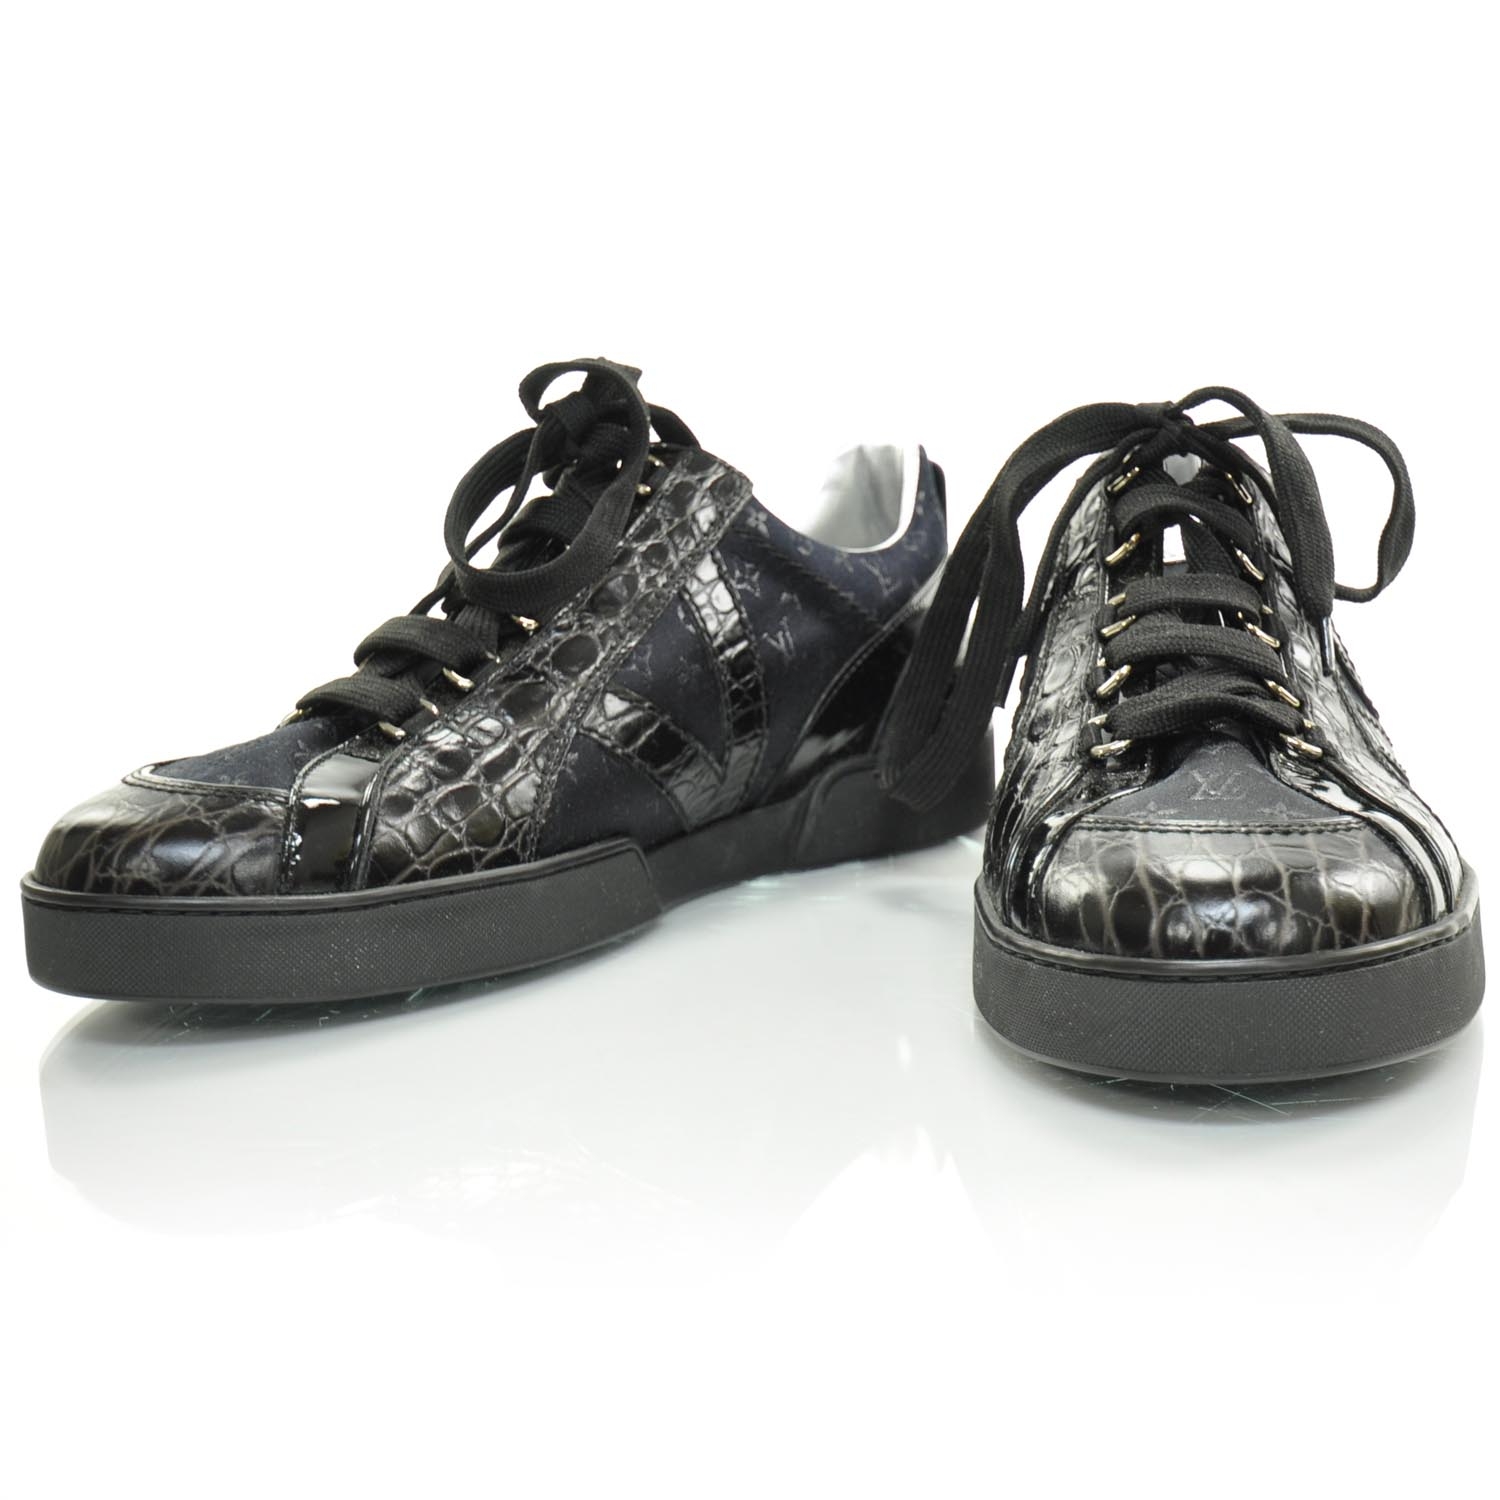 LOUIS VUITTON Mens Crocodile Satin Monogram Sneakers 8.5 Black 22155